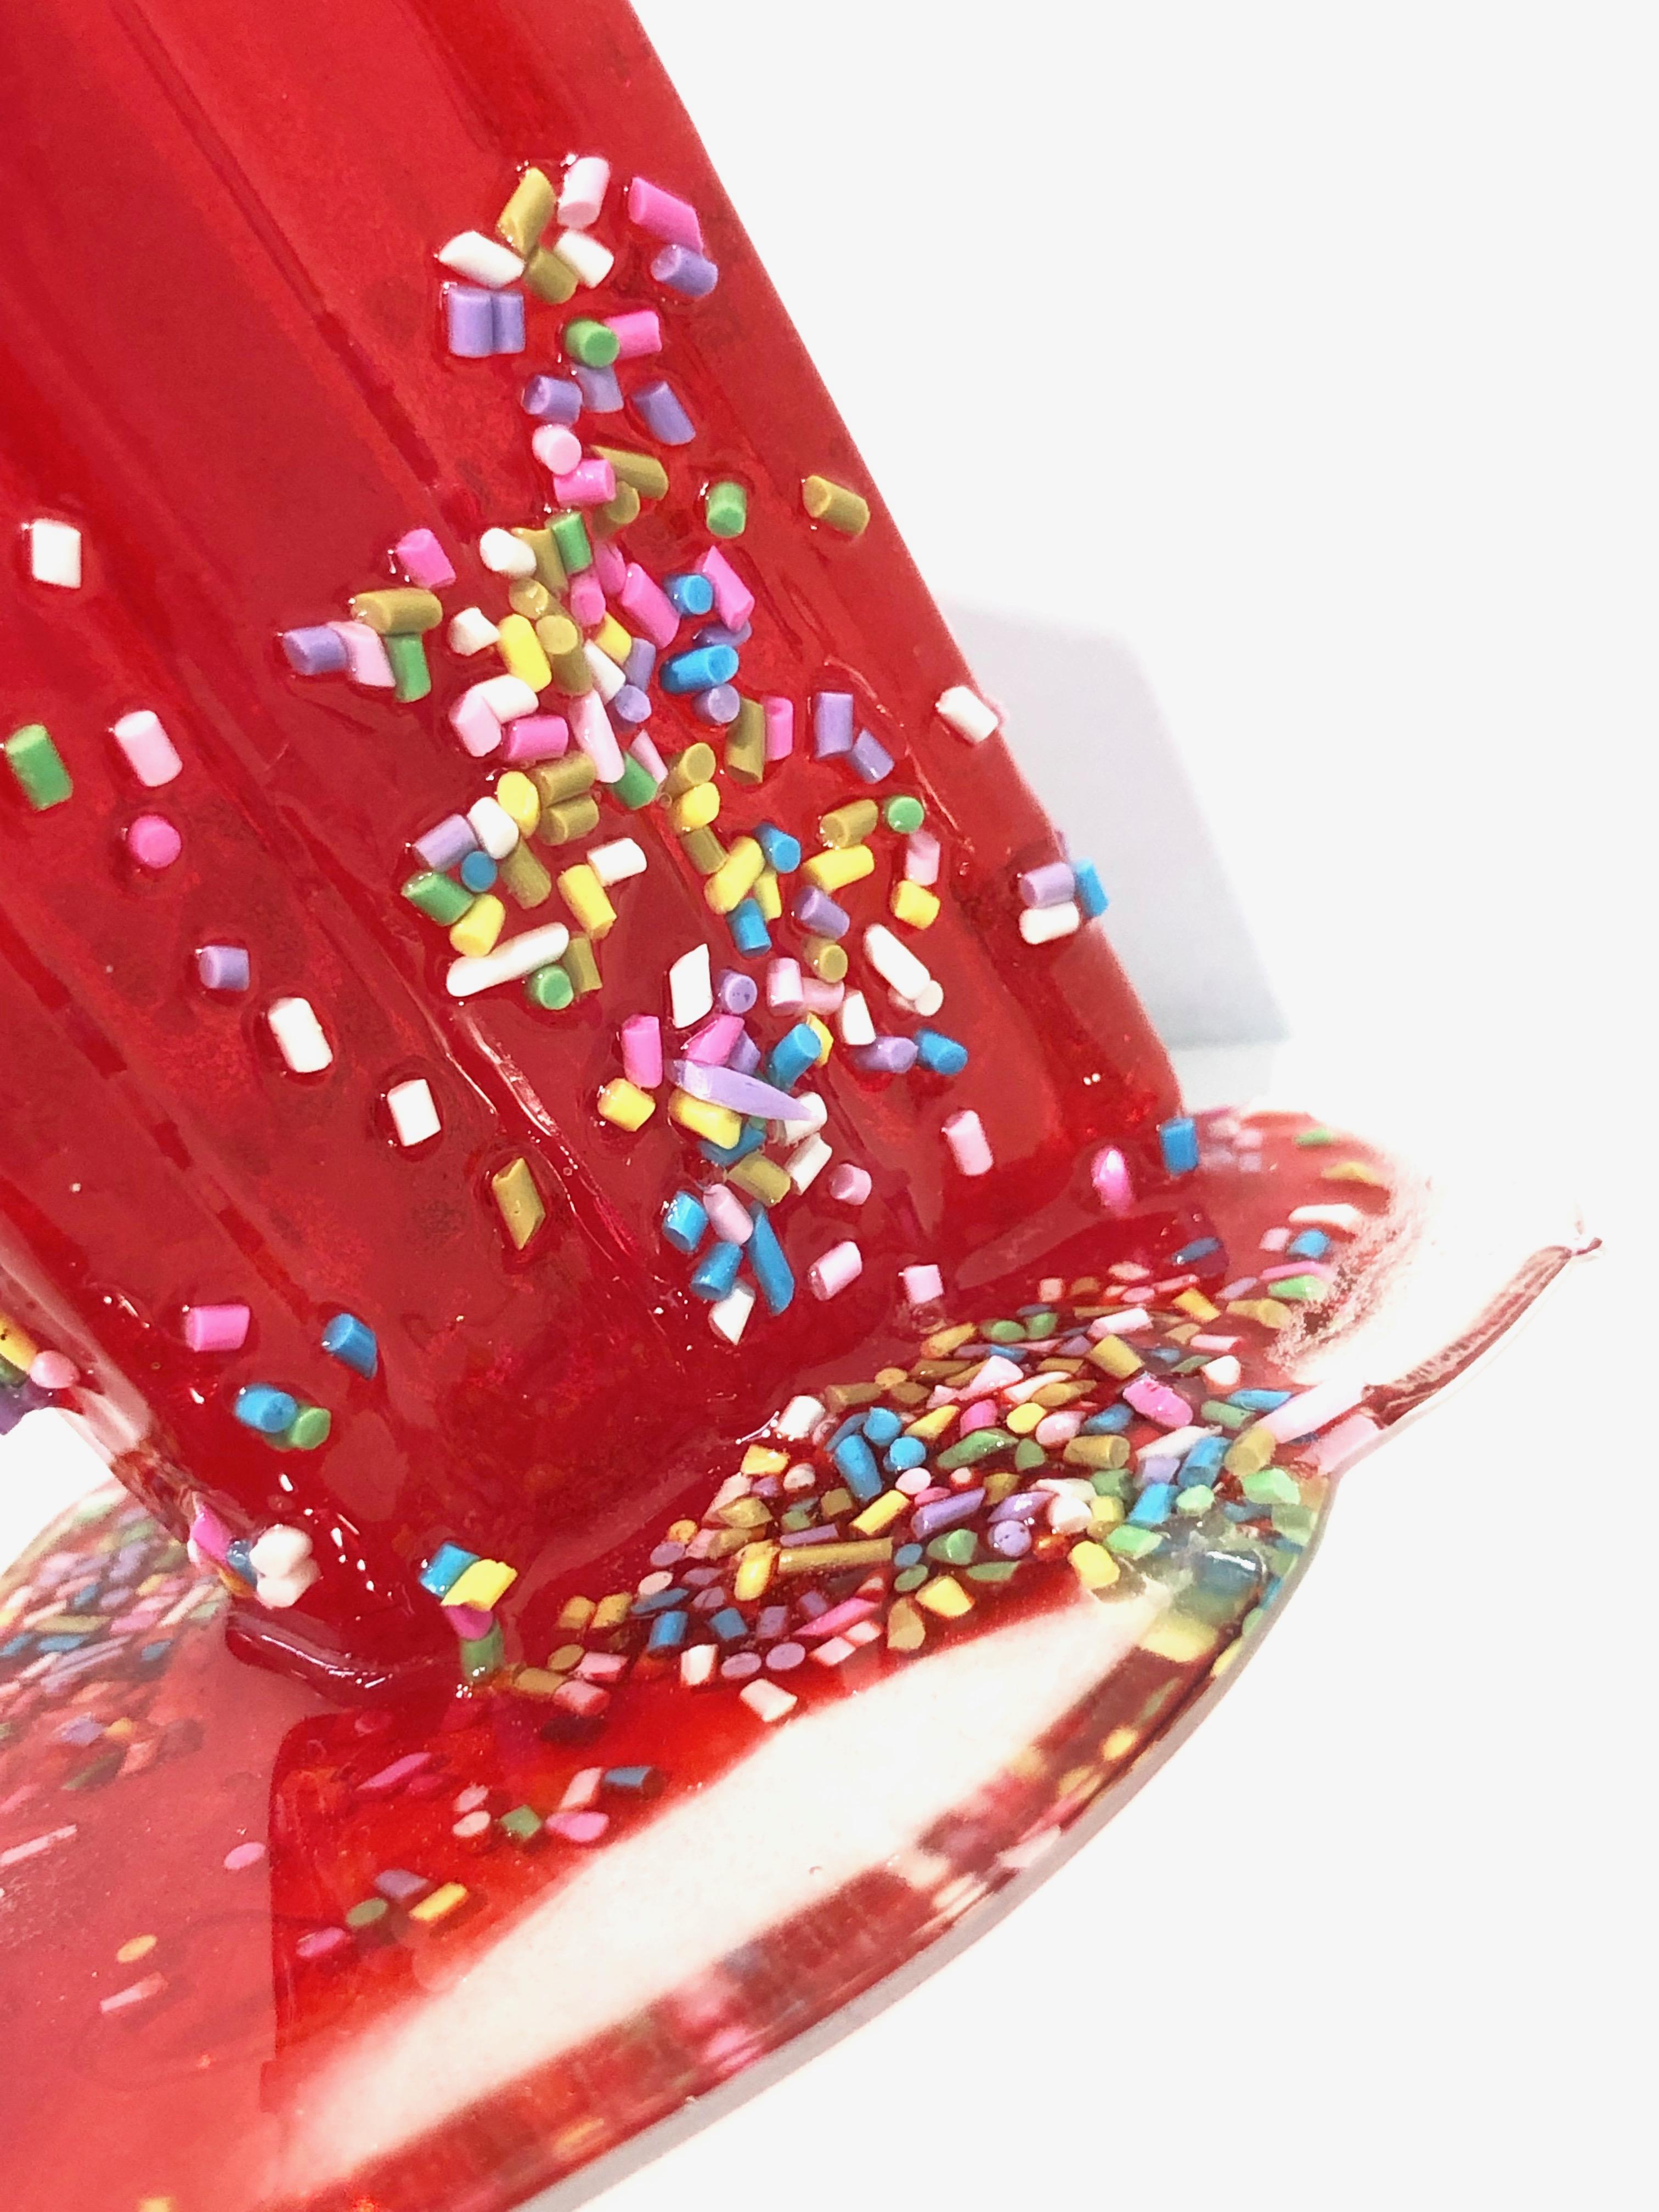 Red Sprinkle Popsicle - Original Resin Sculpture by Betsy Enzensberger 3